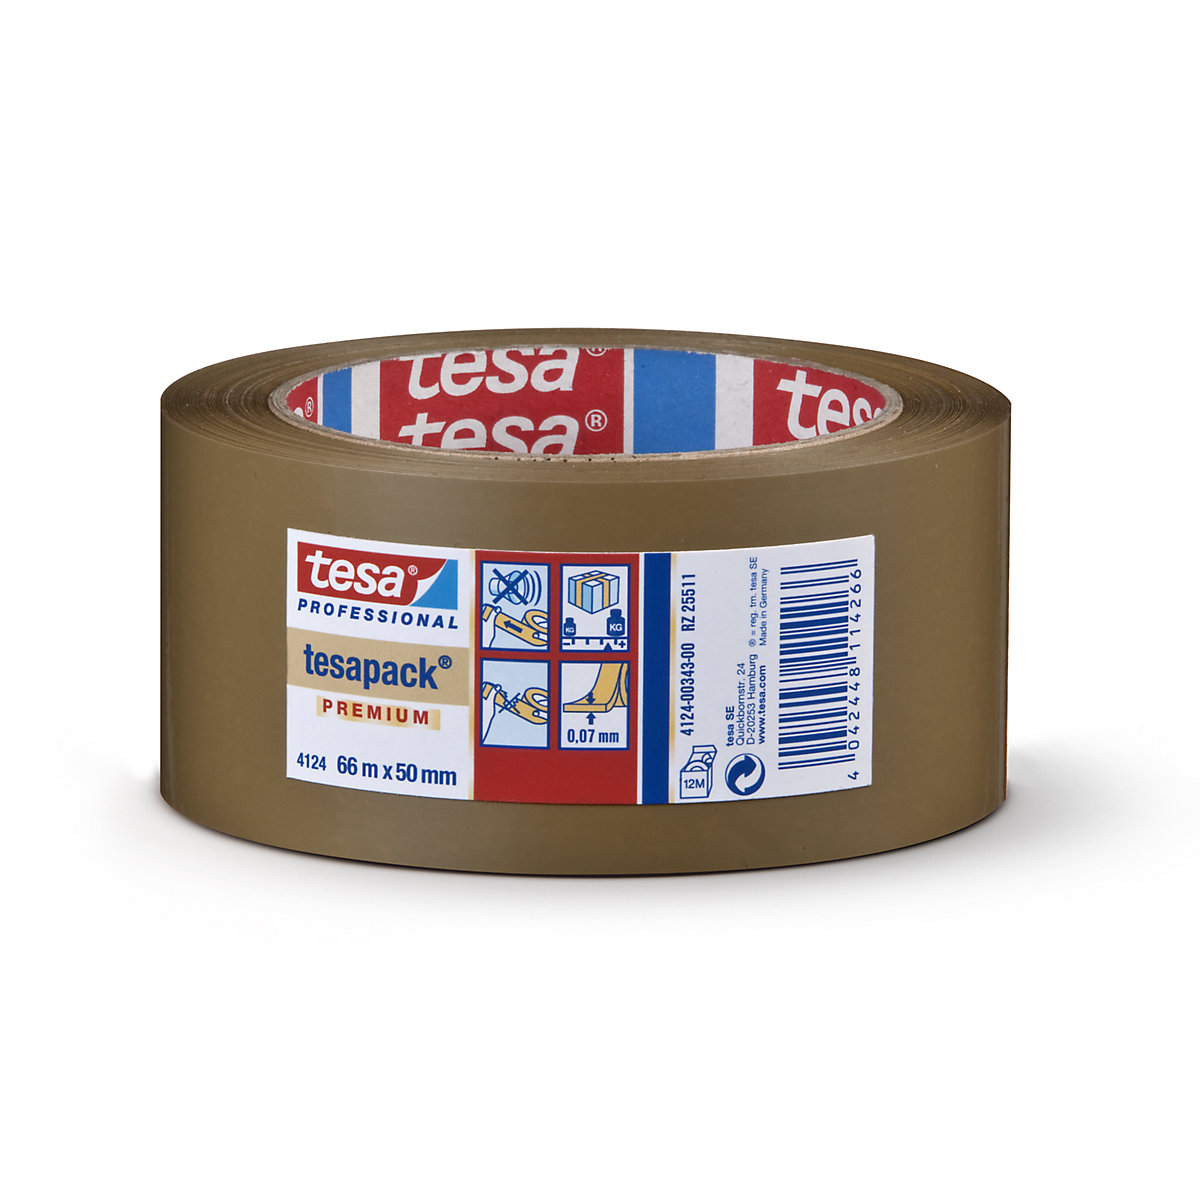 PVC packing tape – tesa, tesapack® 4124 premium, pack of 6 rolls, brown, tape width 50 mm, 18+ packs-2